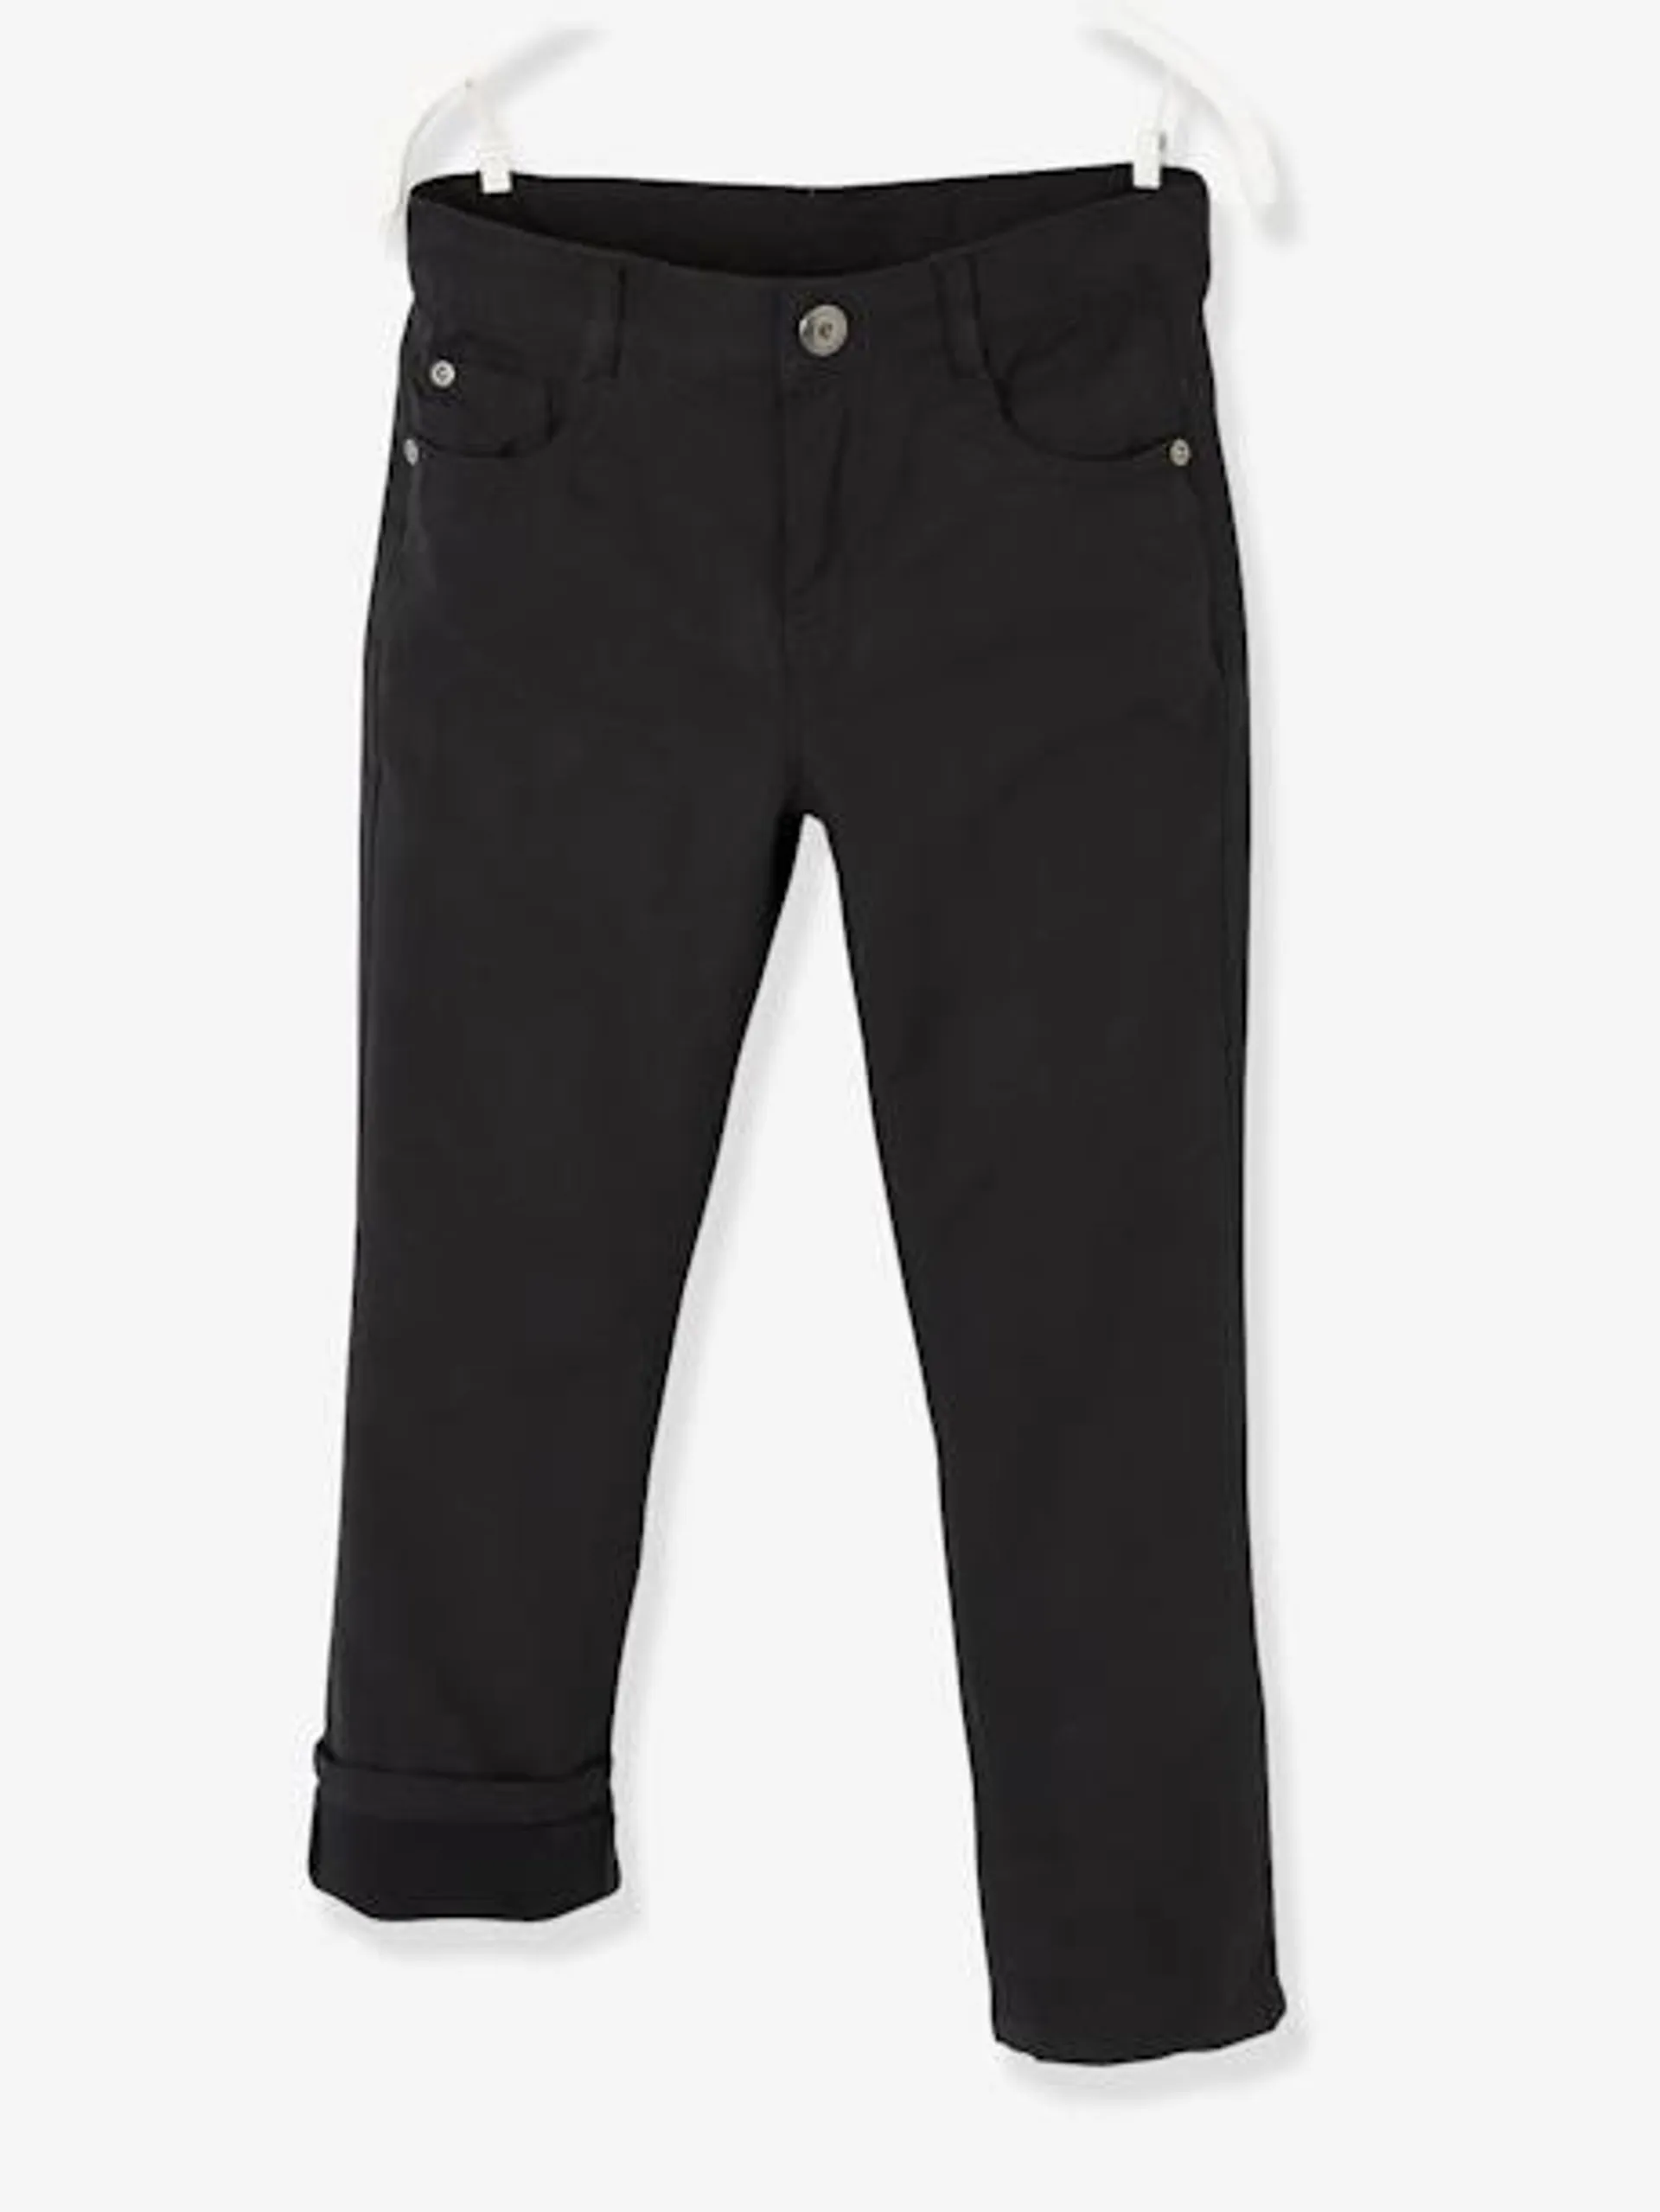 Pantalon indestructible doublé jersey garçon - noir